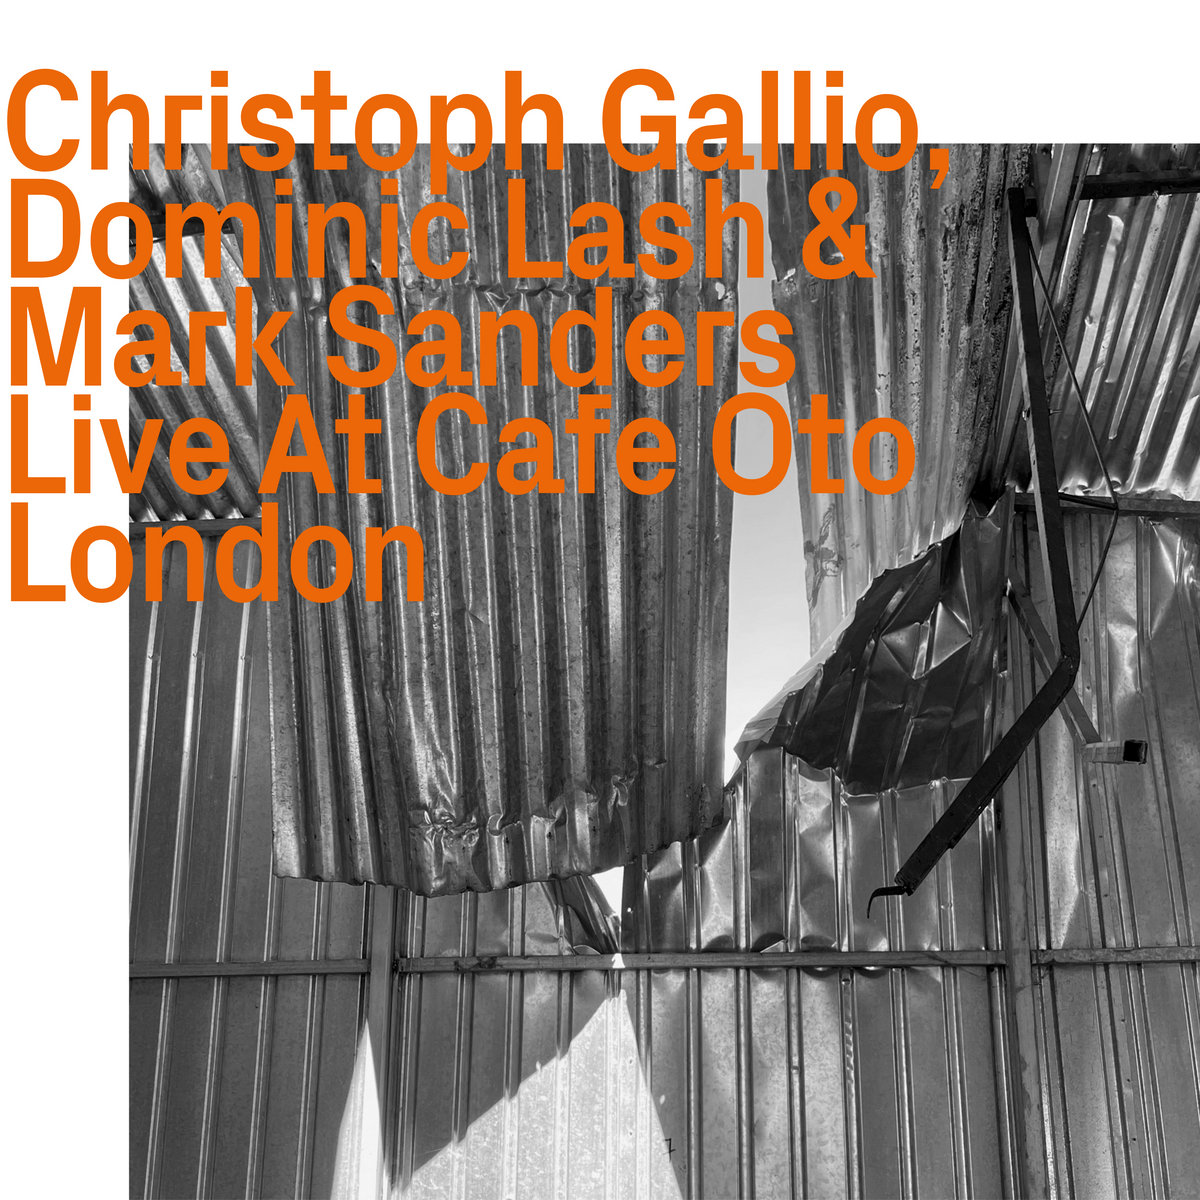 Christoph Gallio, Dominic Lash & Mark Sanders, Live At Cafe Oto London